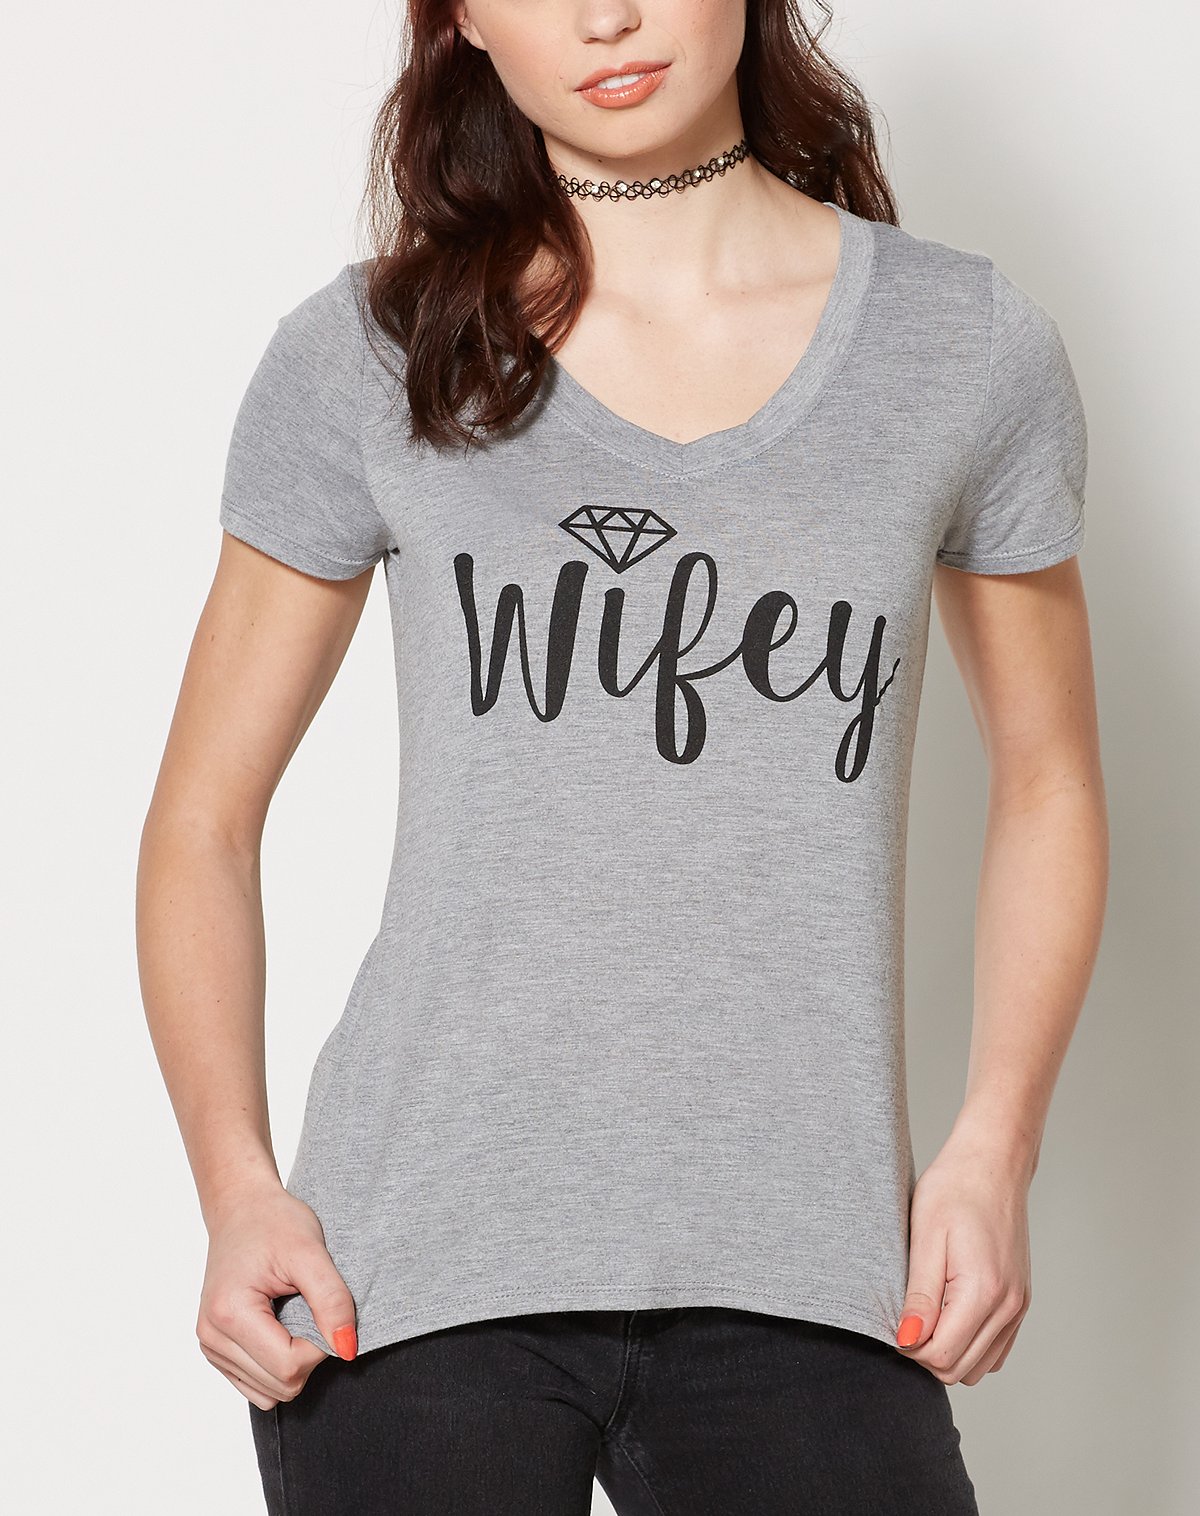 wifey t-shirt tshirt t shirt wife married couples tee